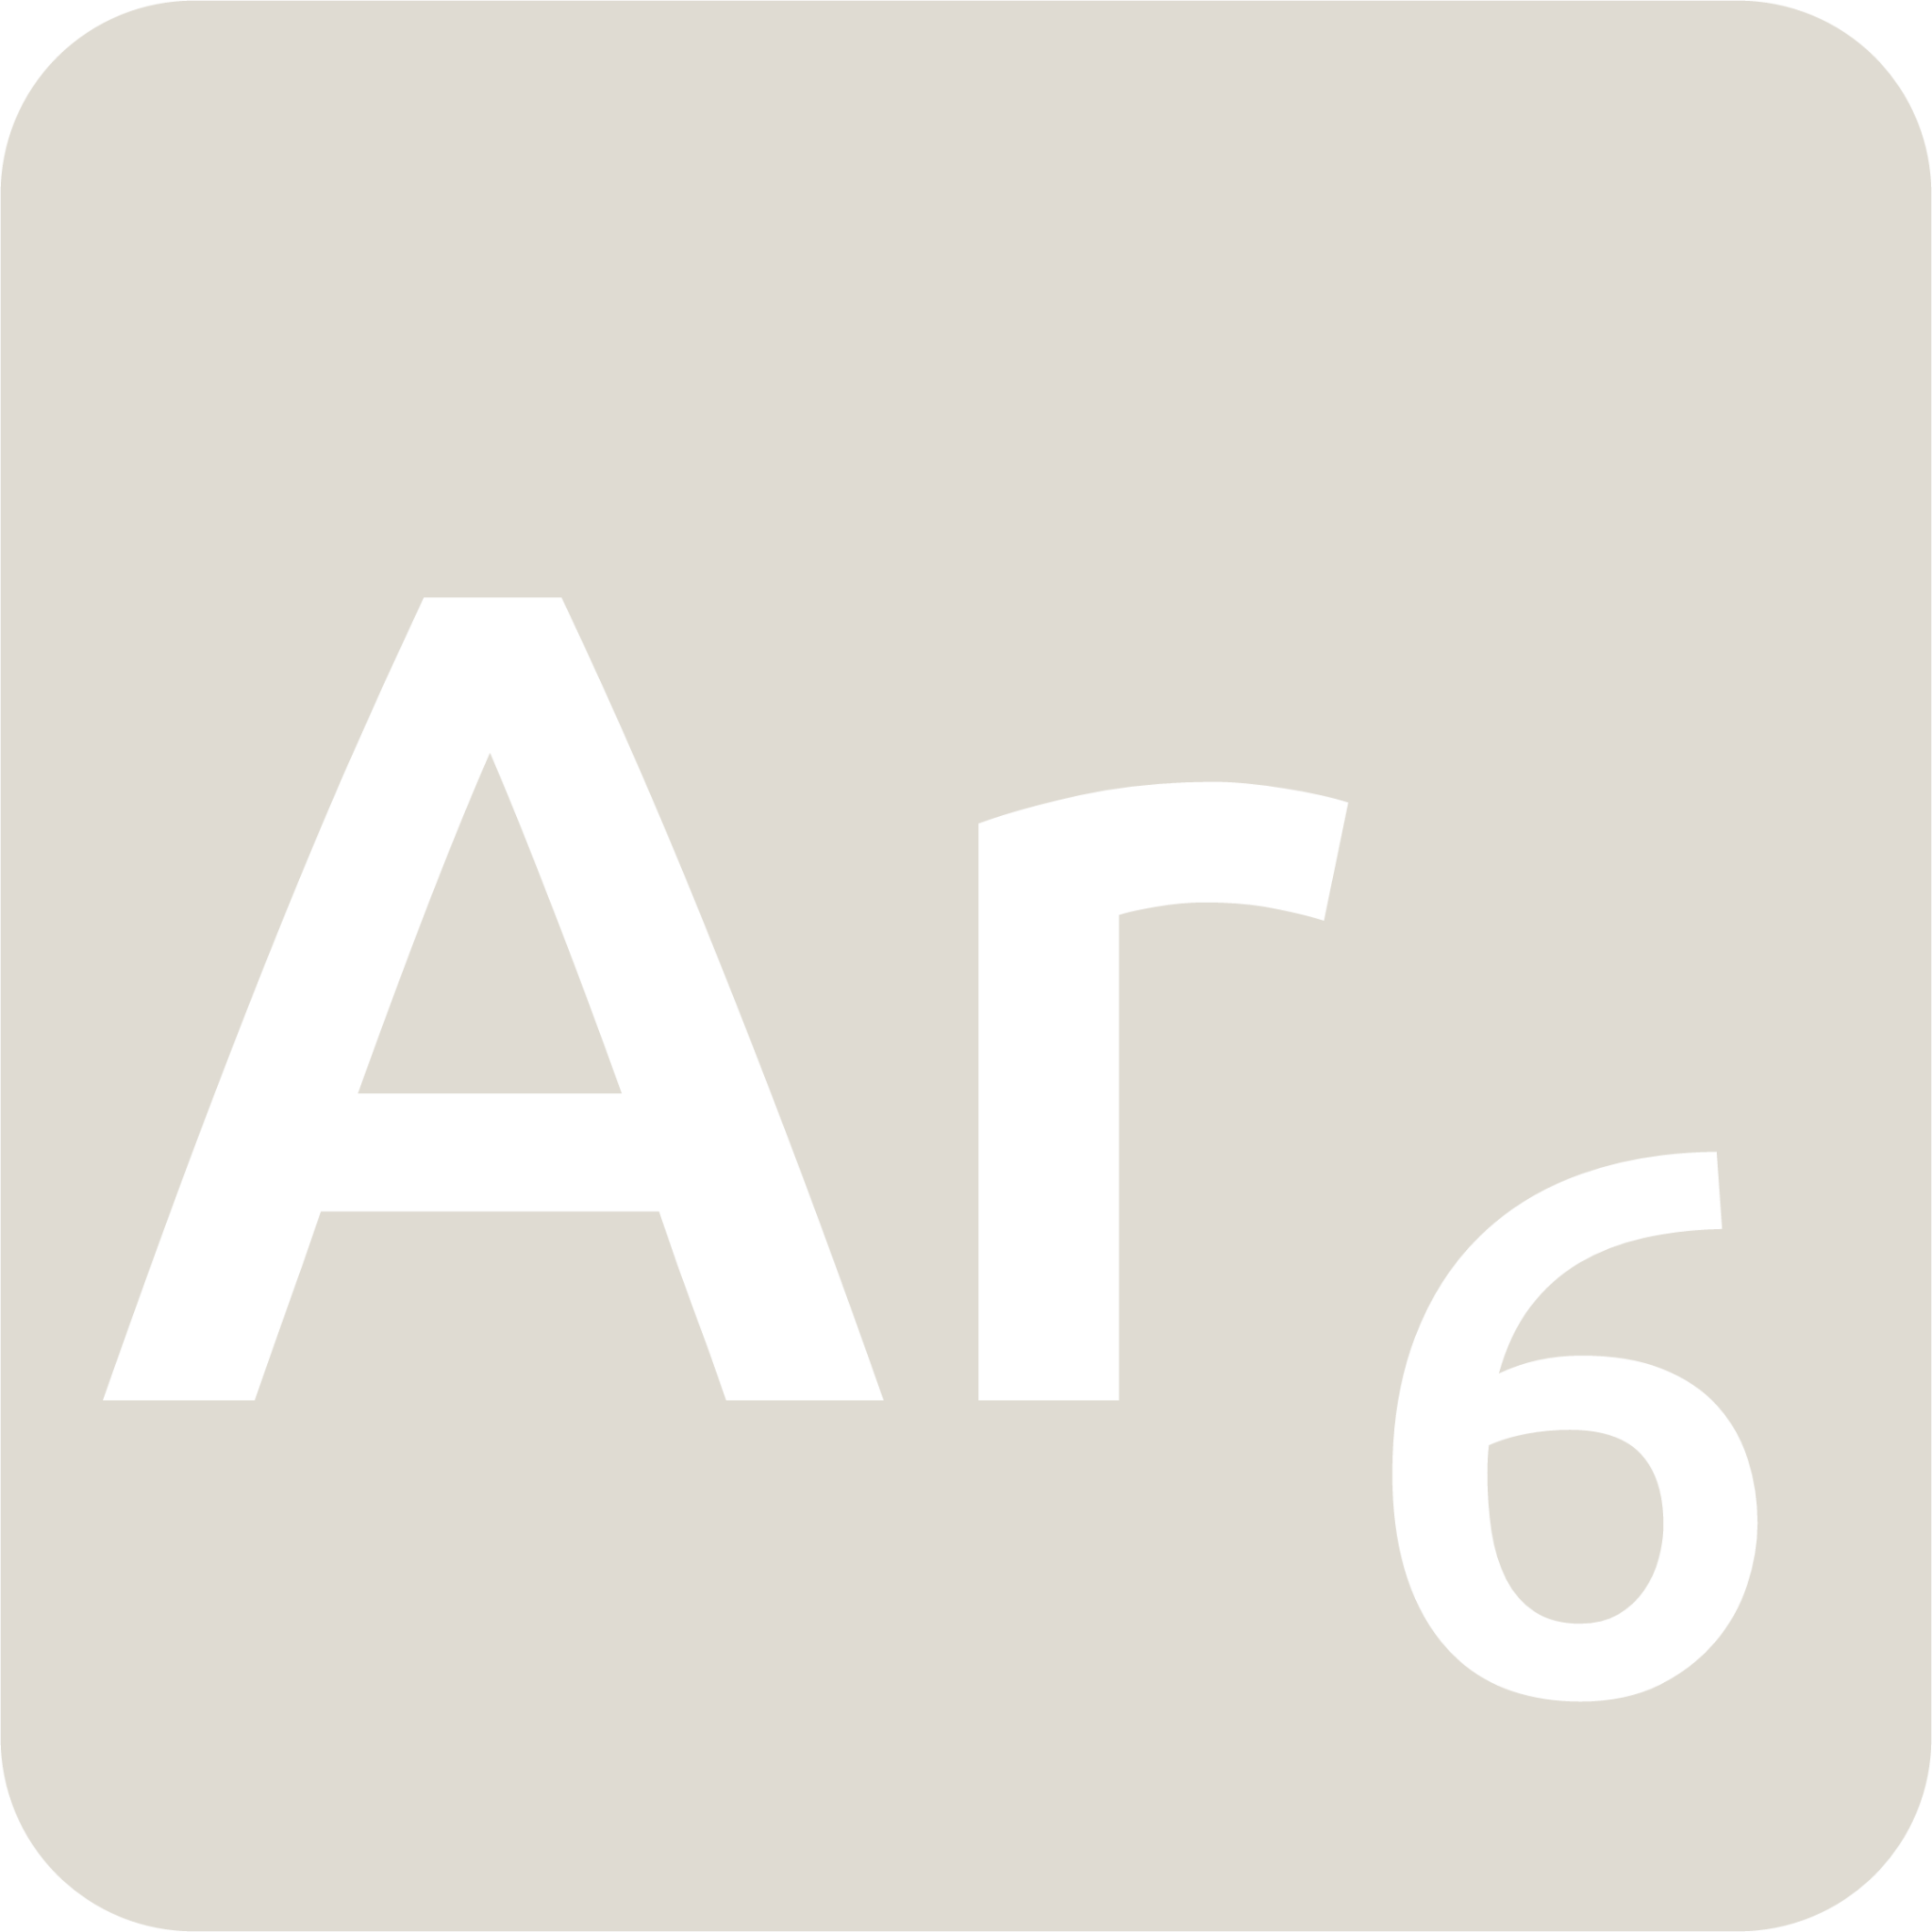 indicator keyboard Ar 6 icon